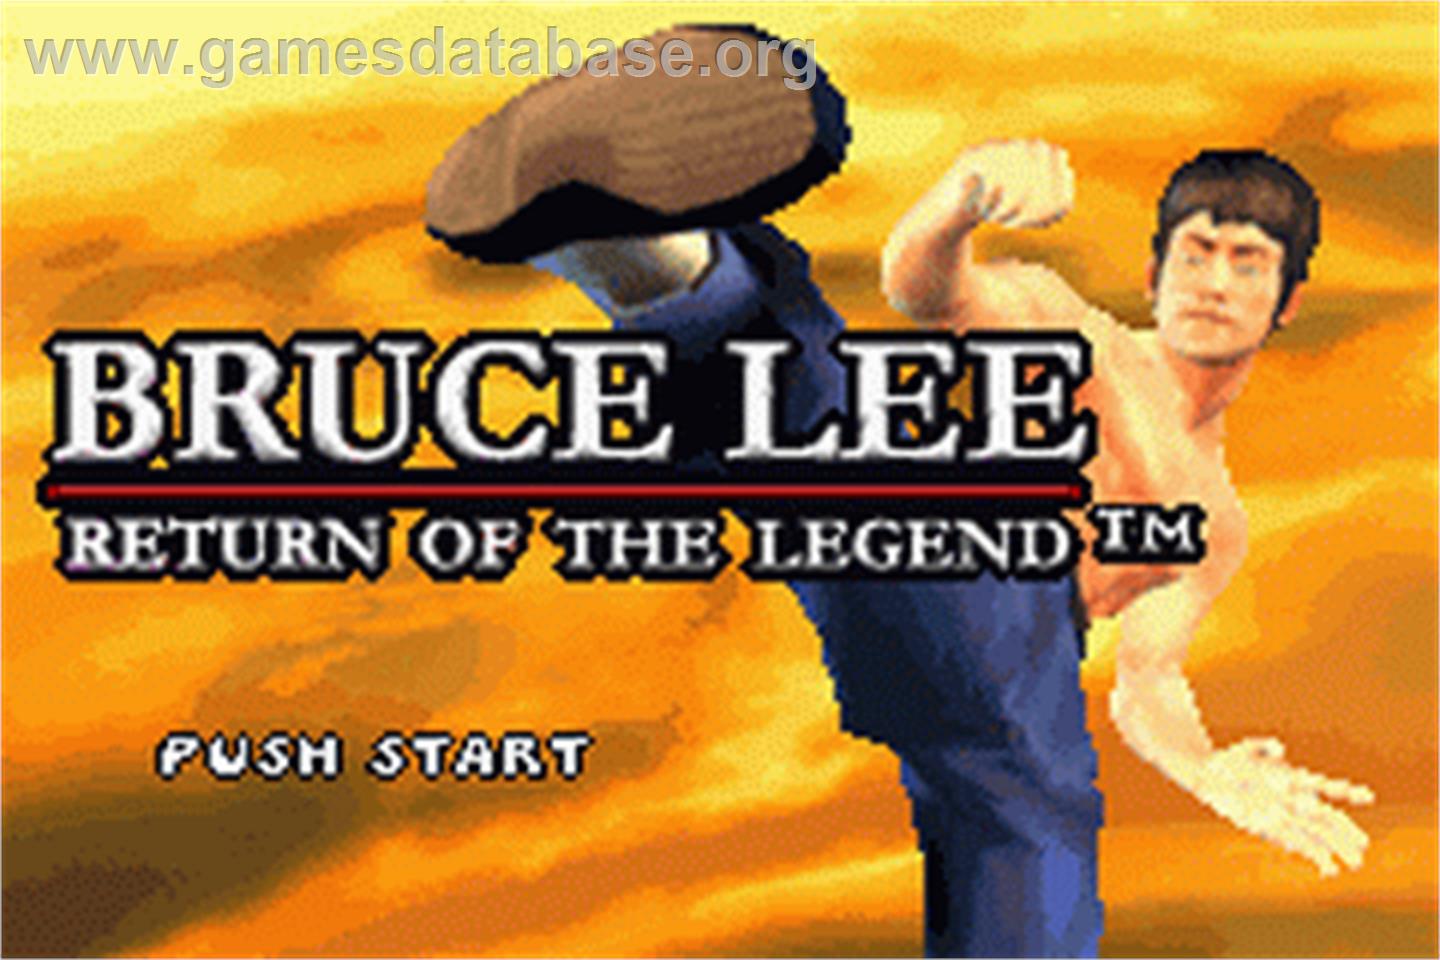 Bruce Lee: Return of the Legend - Nintendo Game Boy Advance - Artwork - Title Screen